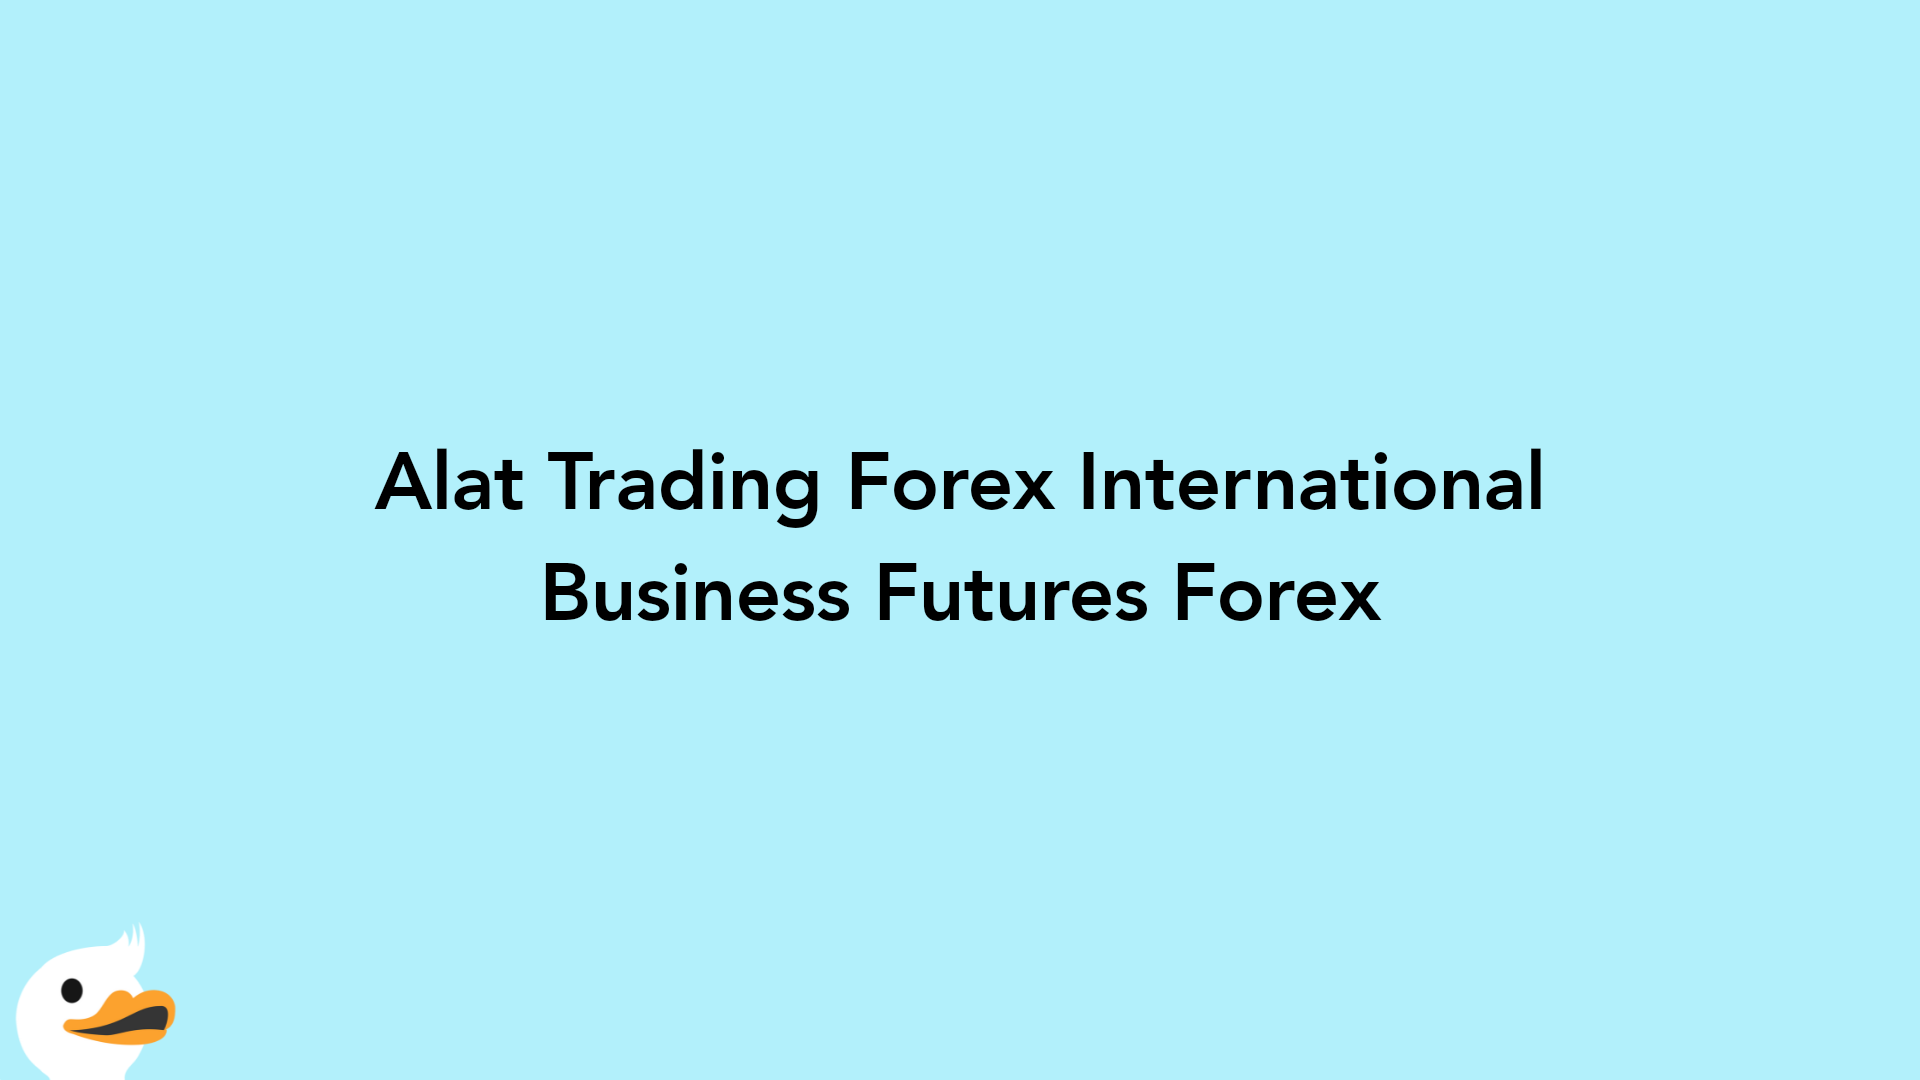 Alat Trading Forex International Business Futures Forex